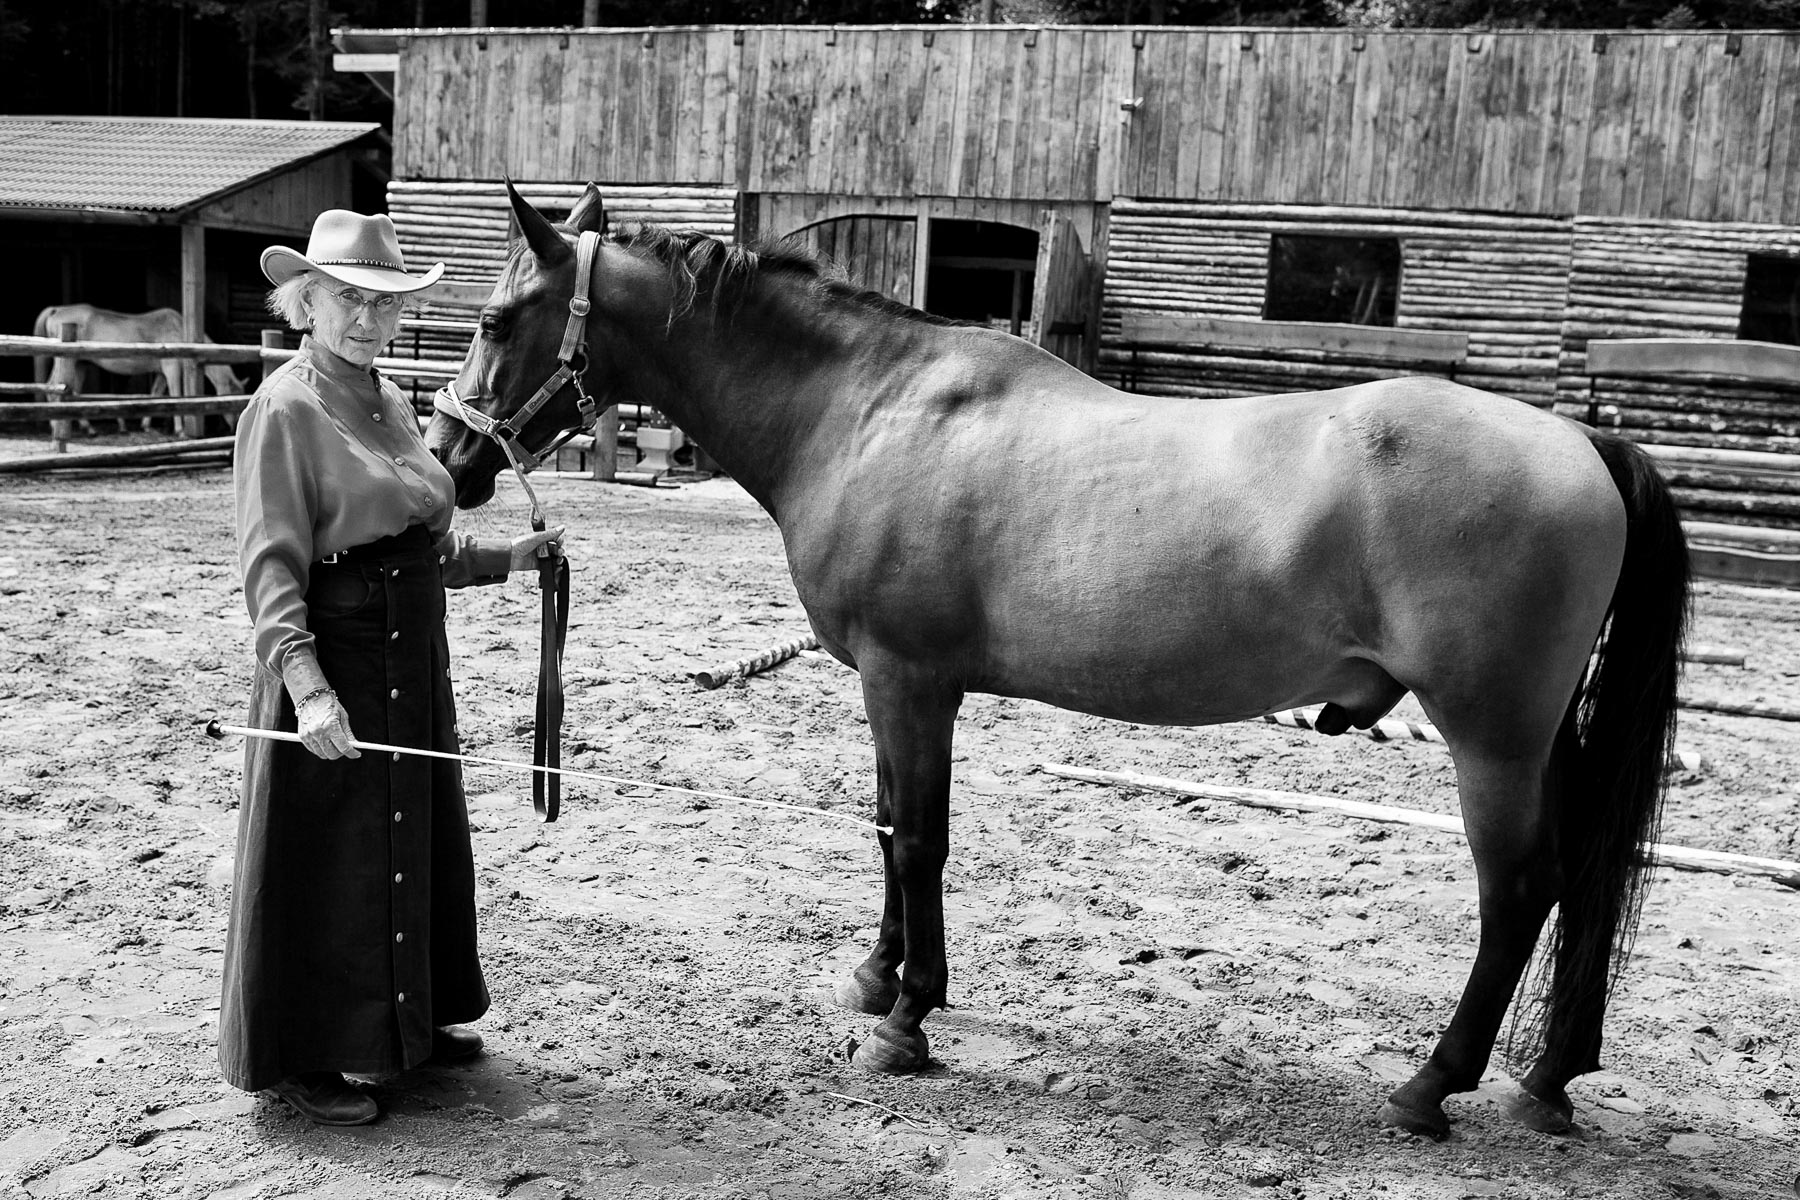 Photos of world-renowned equine expert Linda Tellington-Jones by Luka Dakskobler.